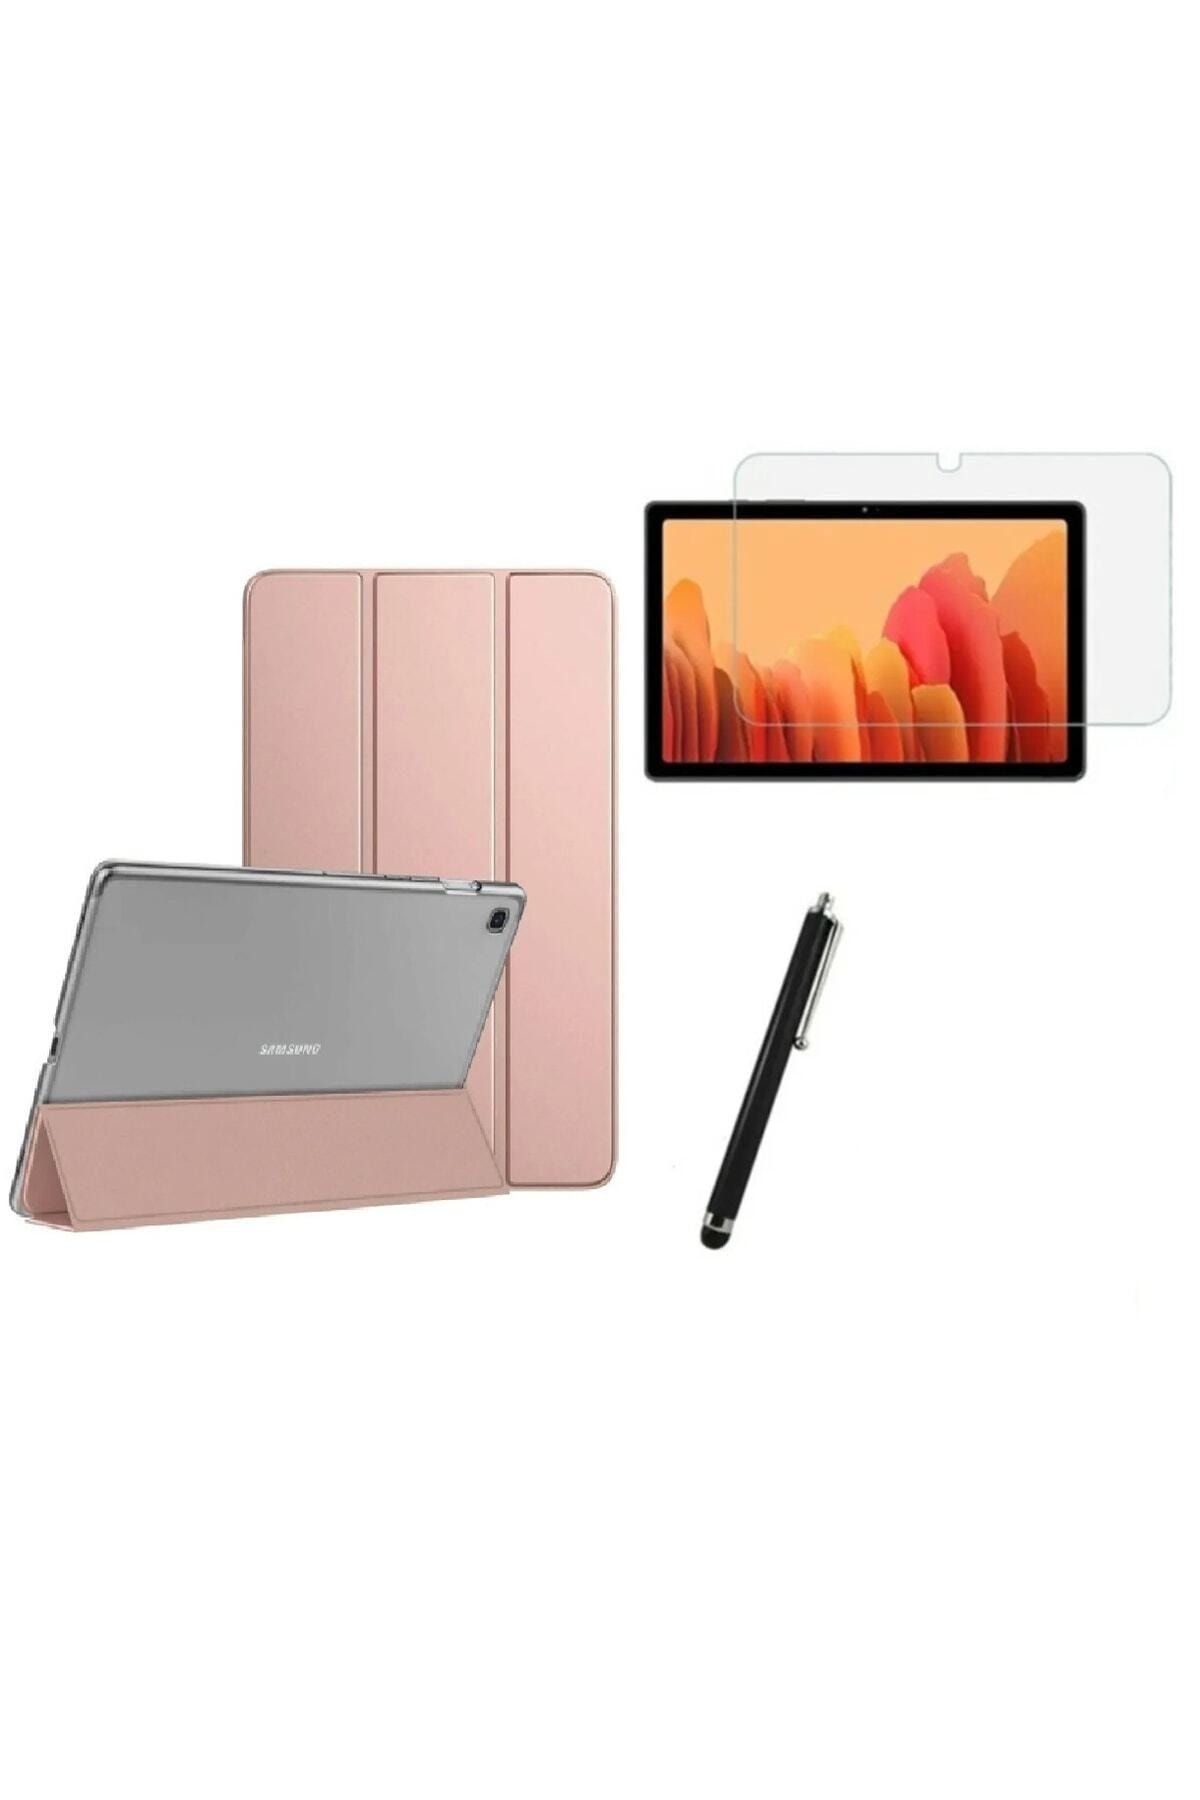 Dolia Samsung Galaxy Tab S6 Lite Uyumlu Sm P610 P617 Smart Kapak Tablet Kılıfı + Ekran Koruyucu + Kalem